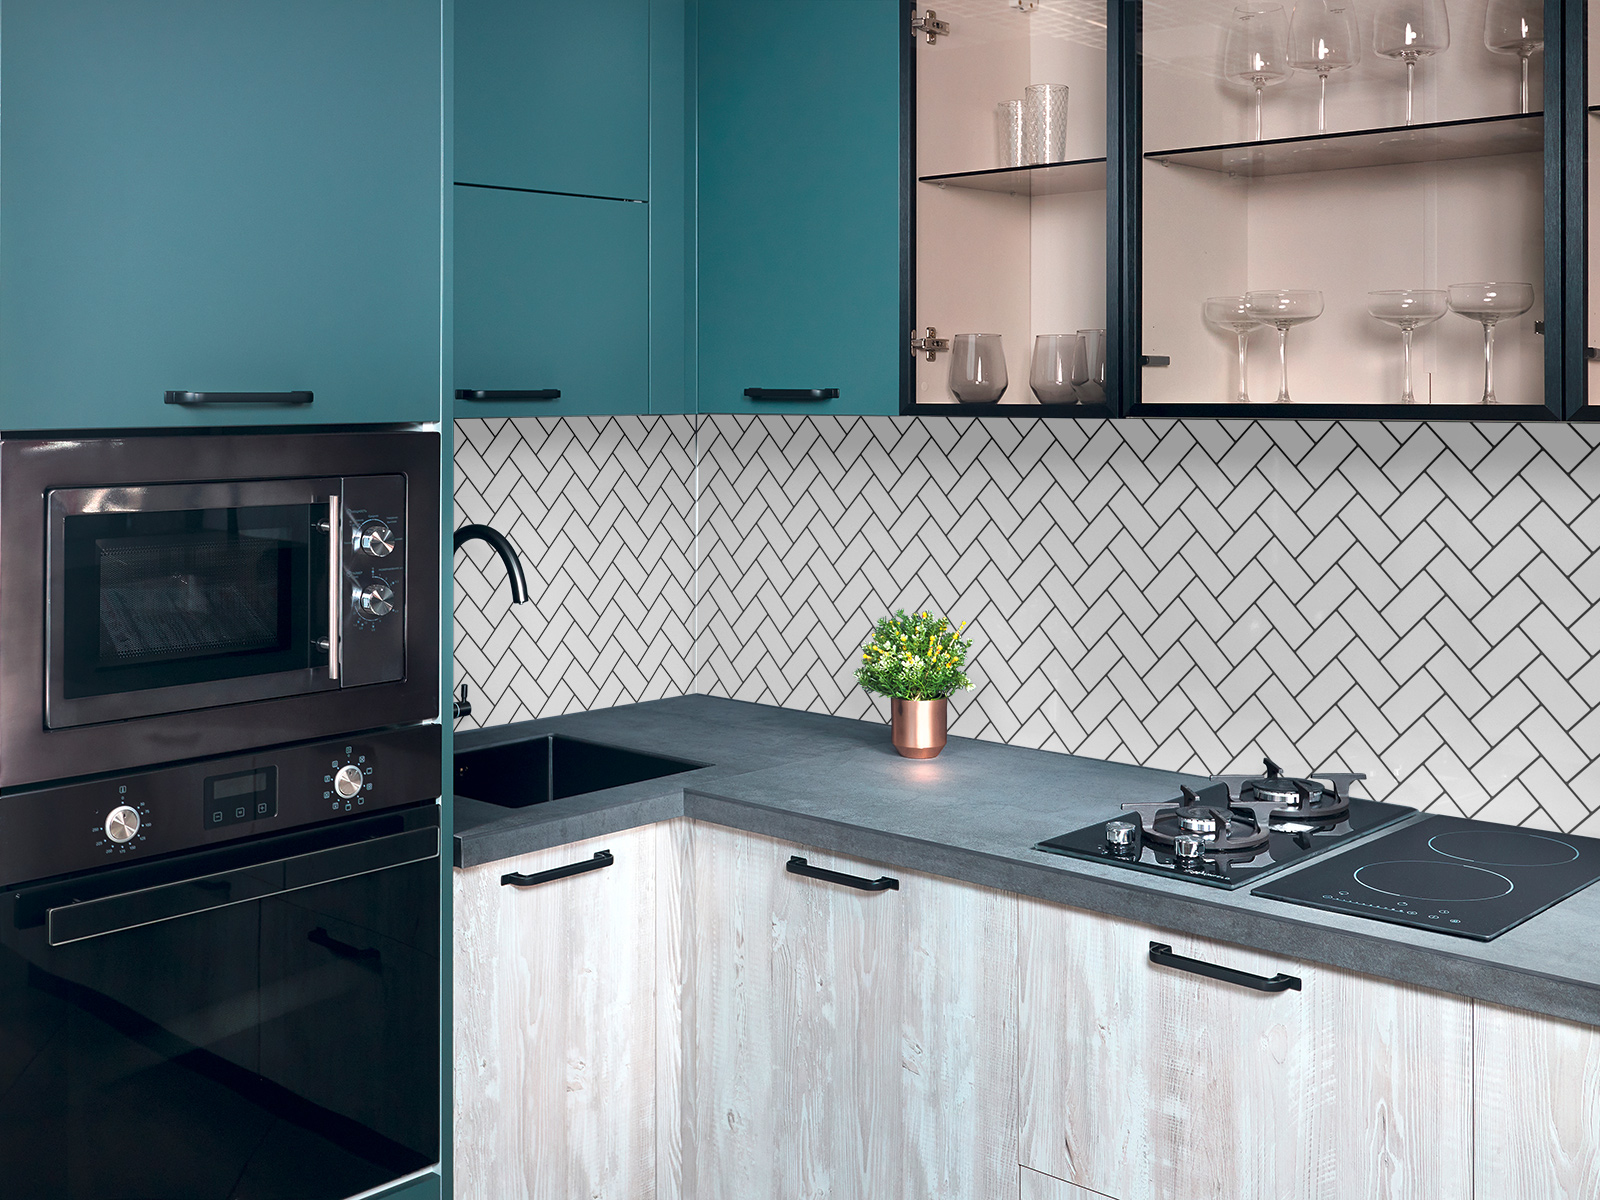 Sácale partido a cocina con los azulejos adhesivos - Blog Printodecor